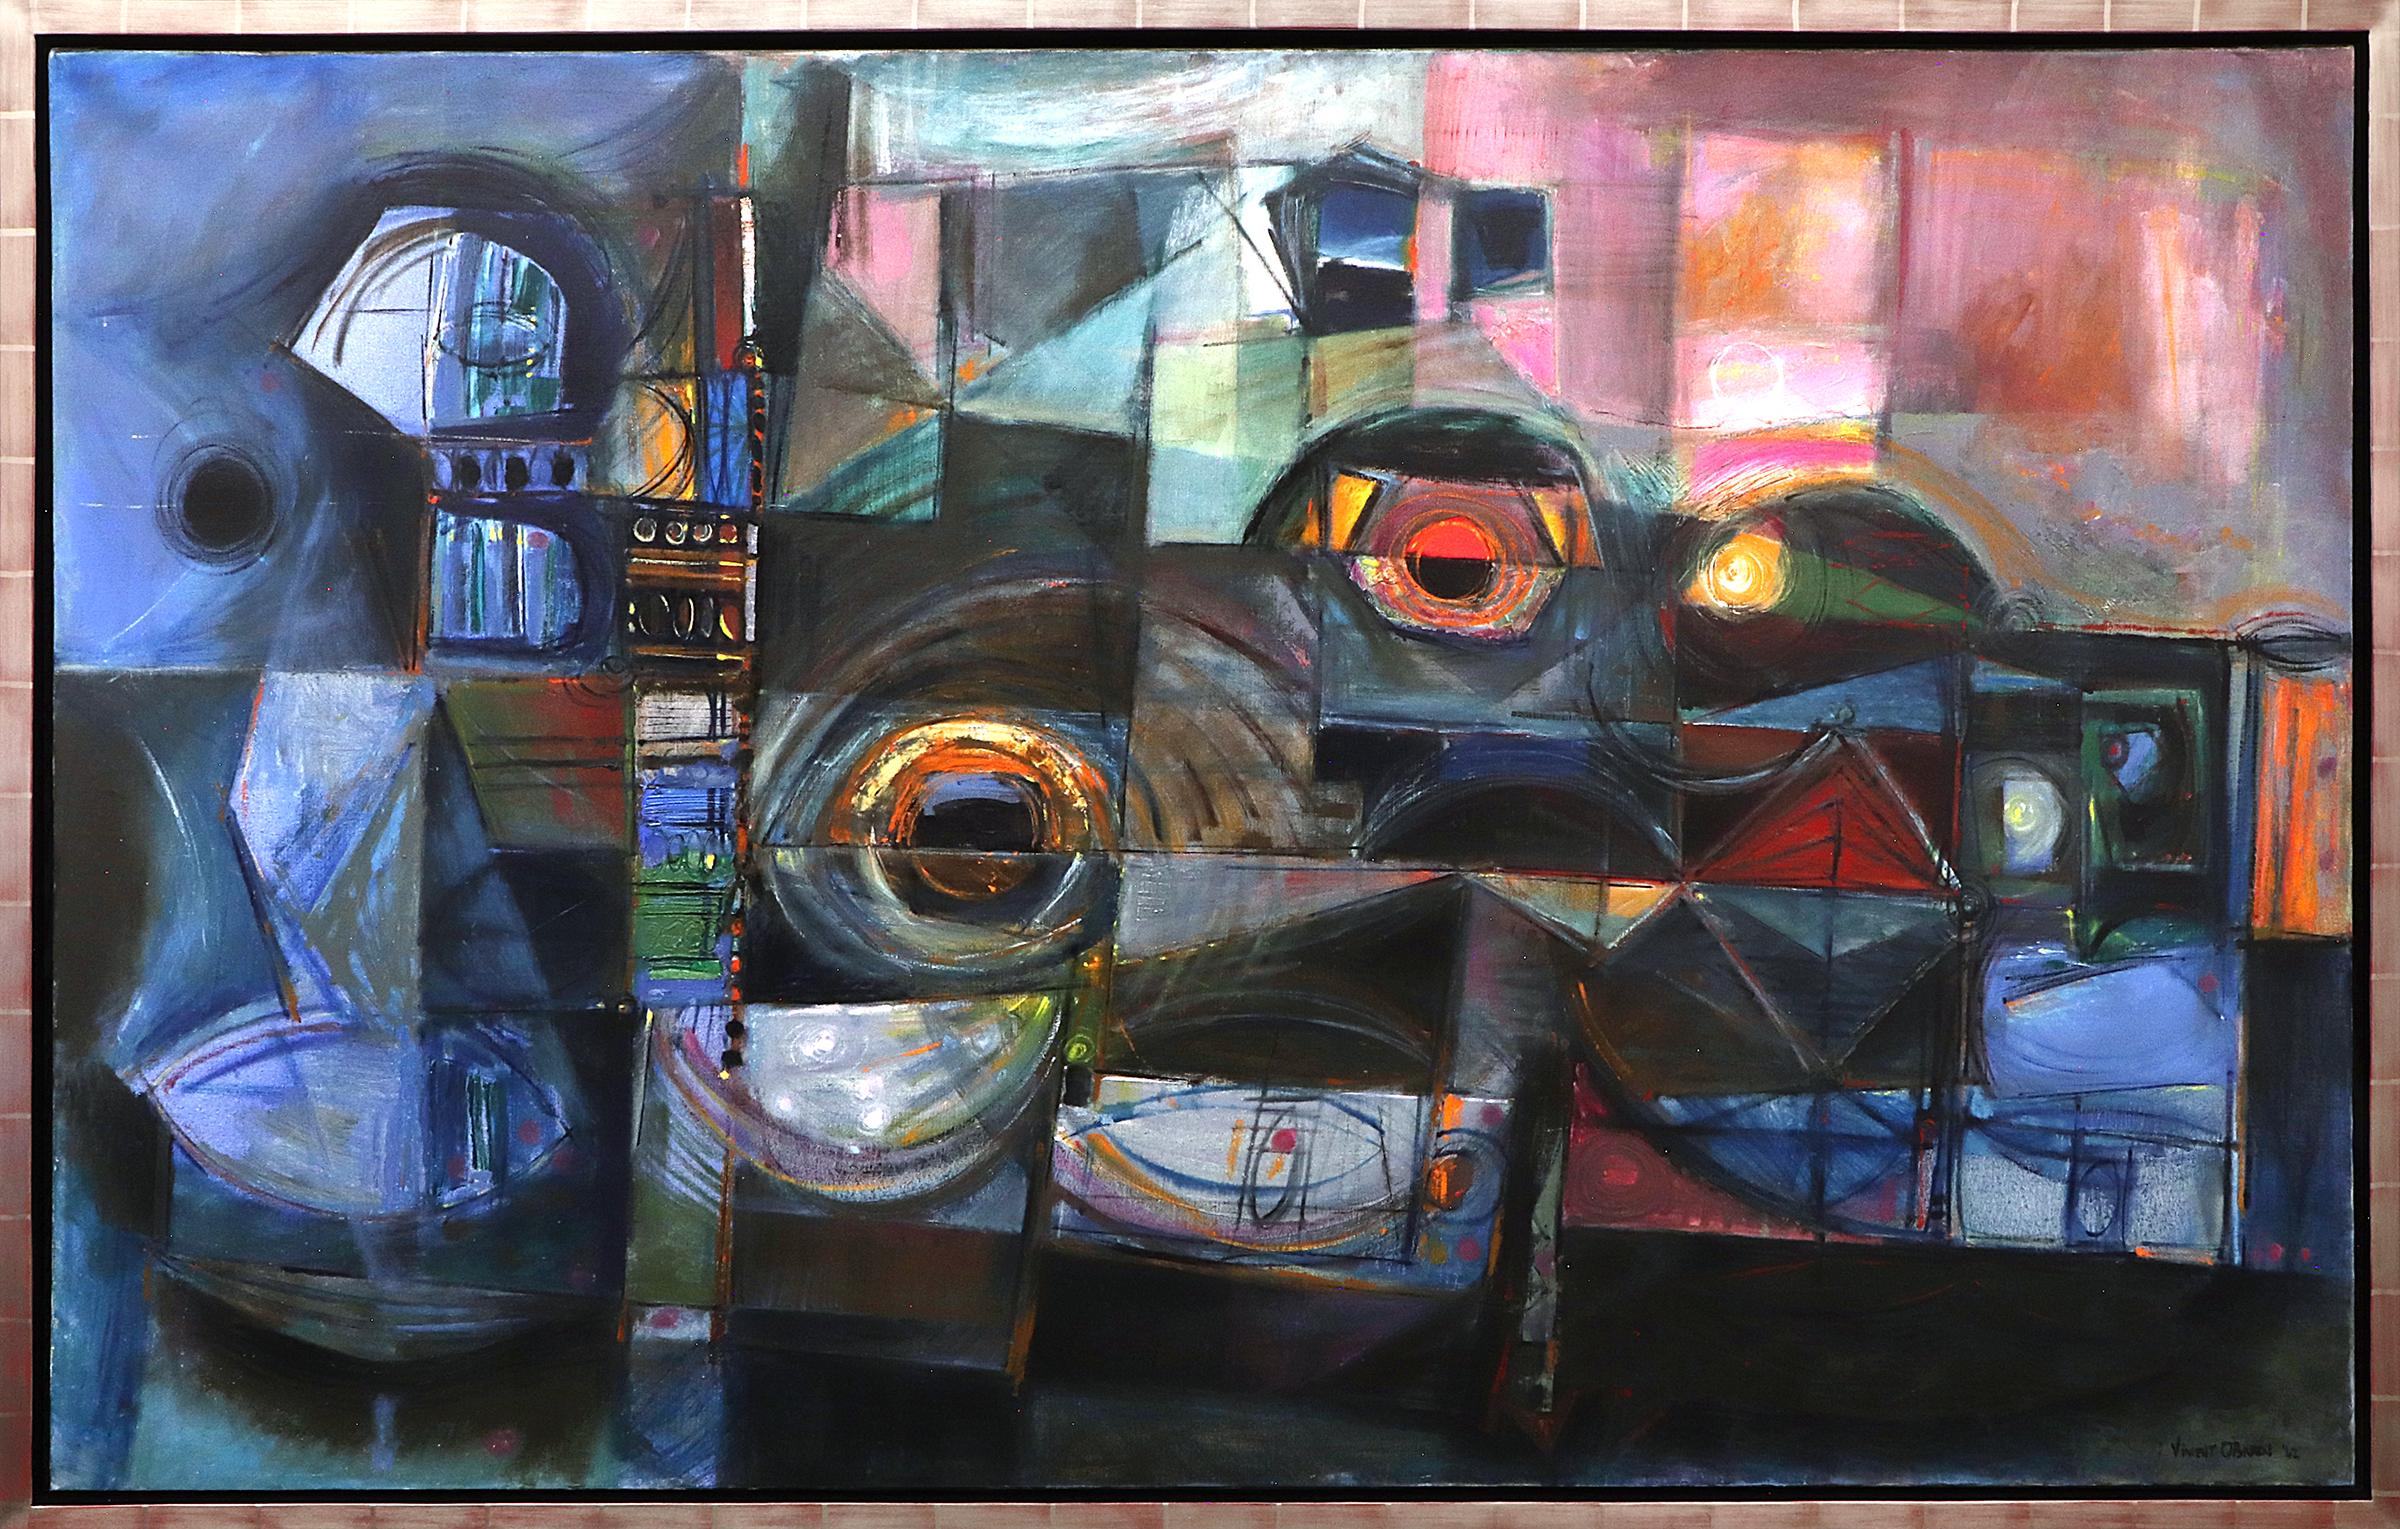 Vincent Pershing O'Brien Abstract Painting – Lights at Night - 1960er Jahre Abstraktes Ölgemälde auf Leinwand in Blau, Lila und Anstecknadel